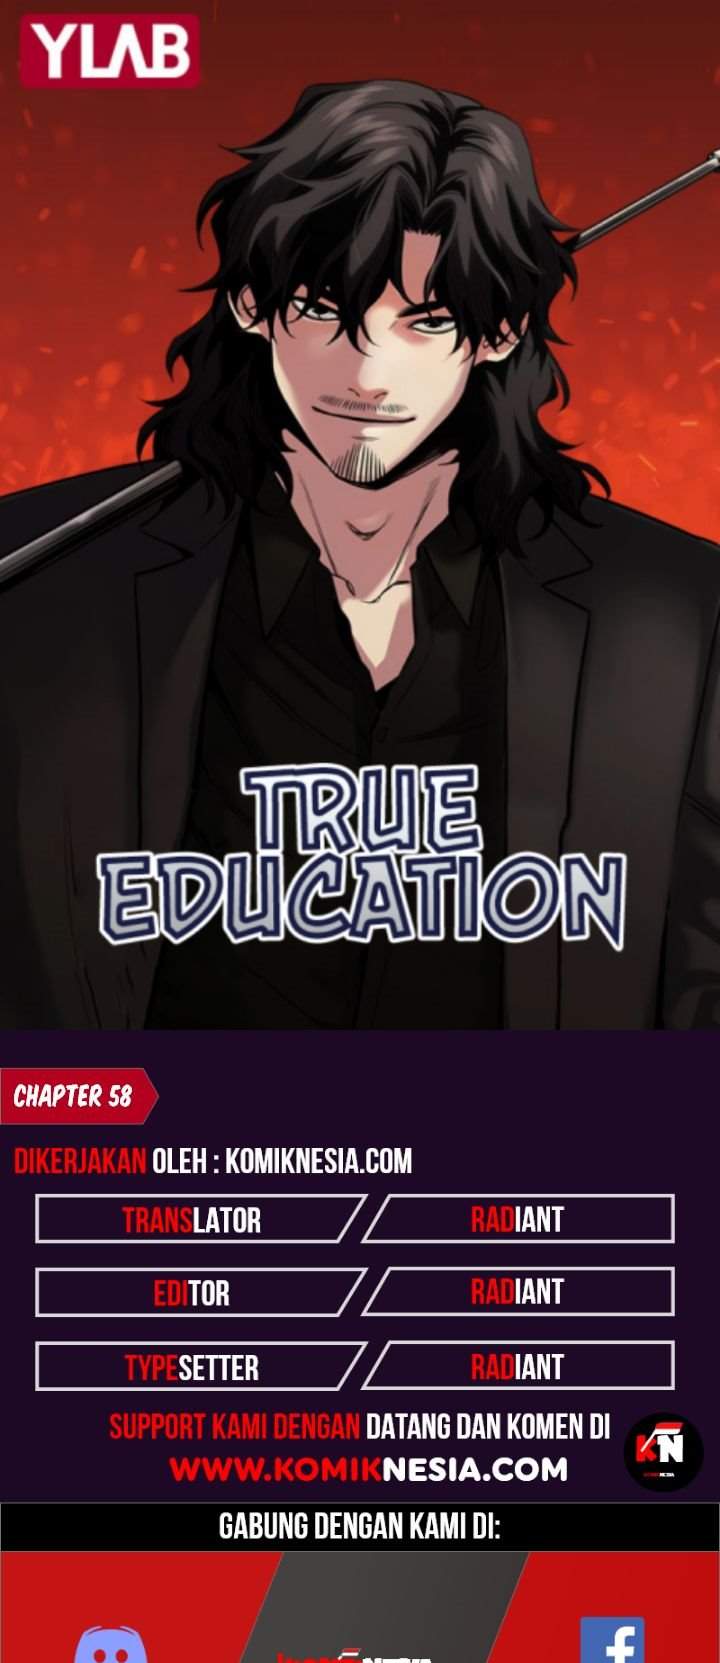 True Education Chapter 58